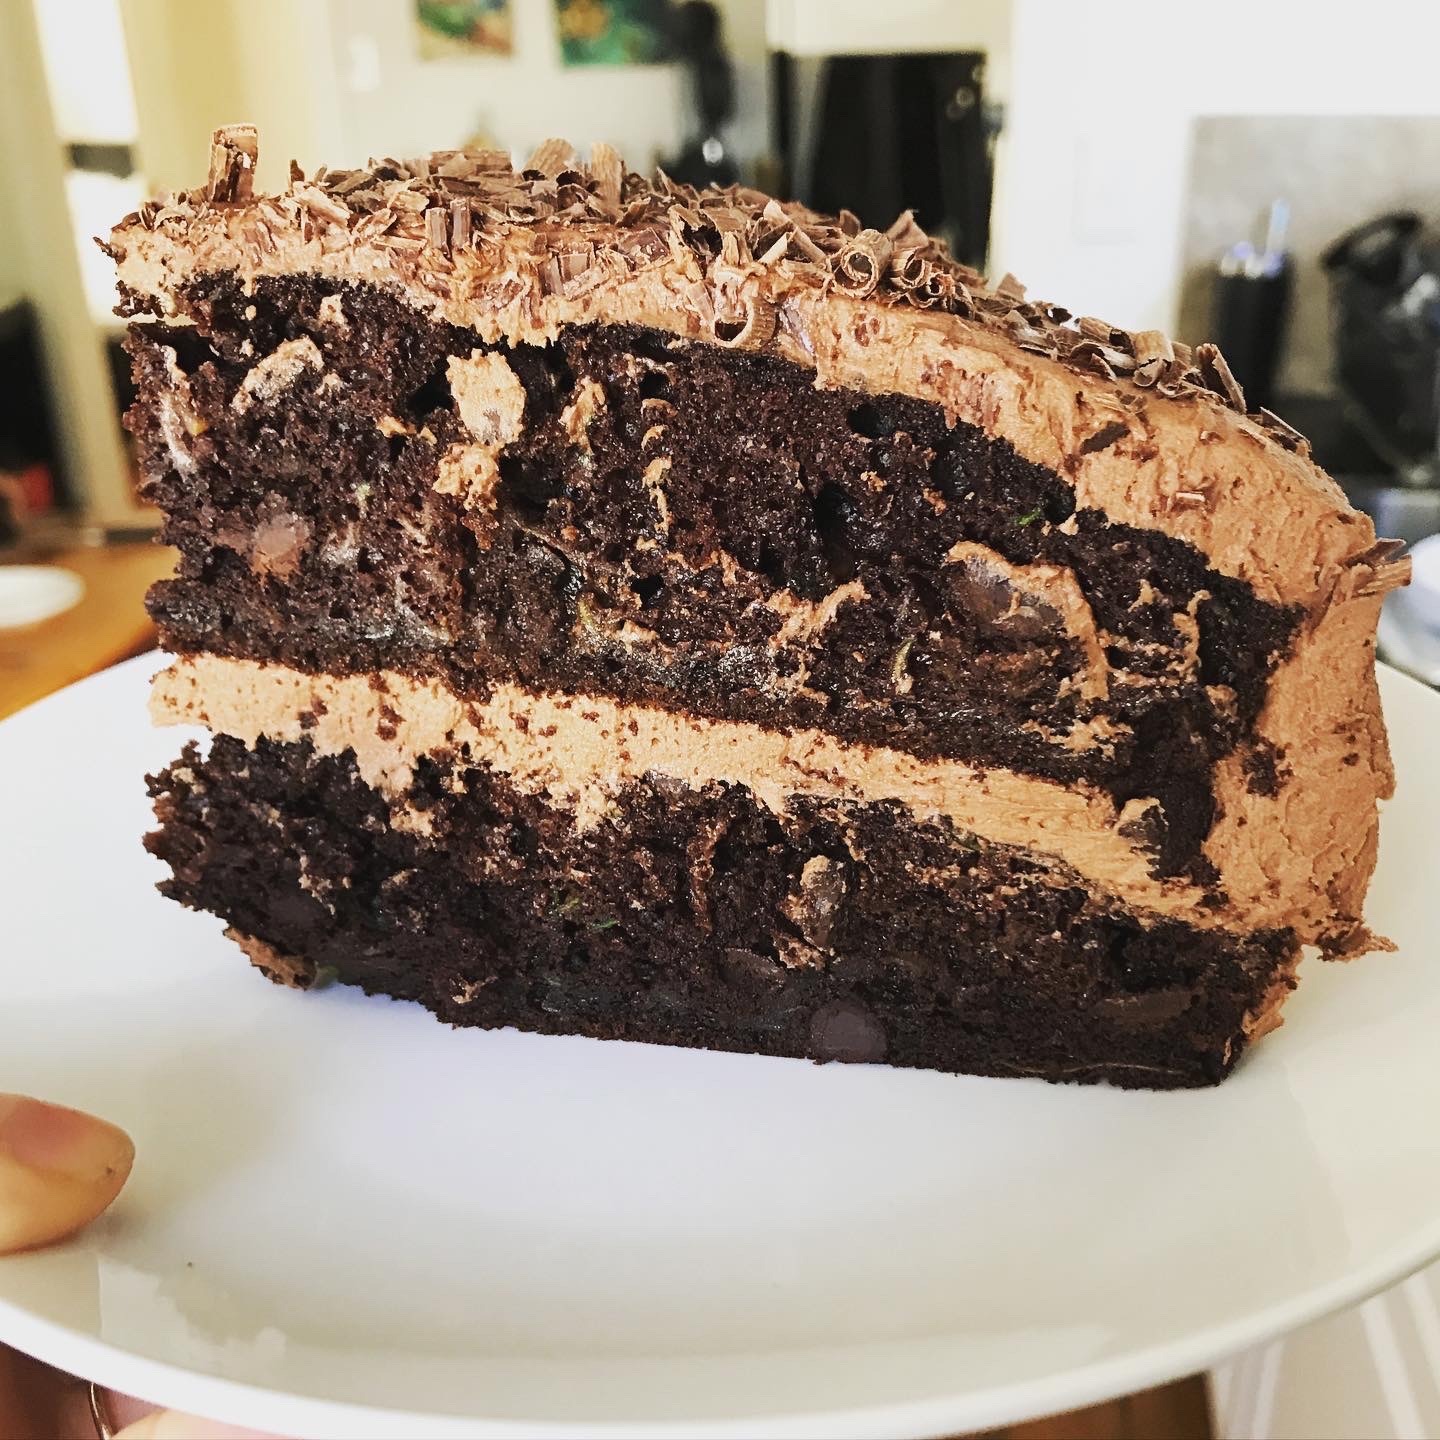 slice of dark chocolate zucchini cake with chocolate shavings and frosting